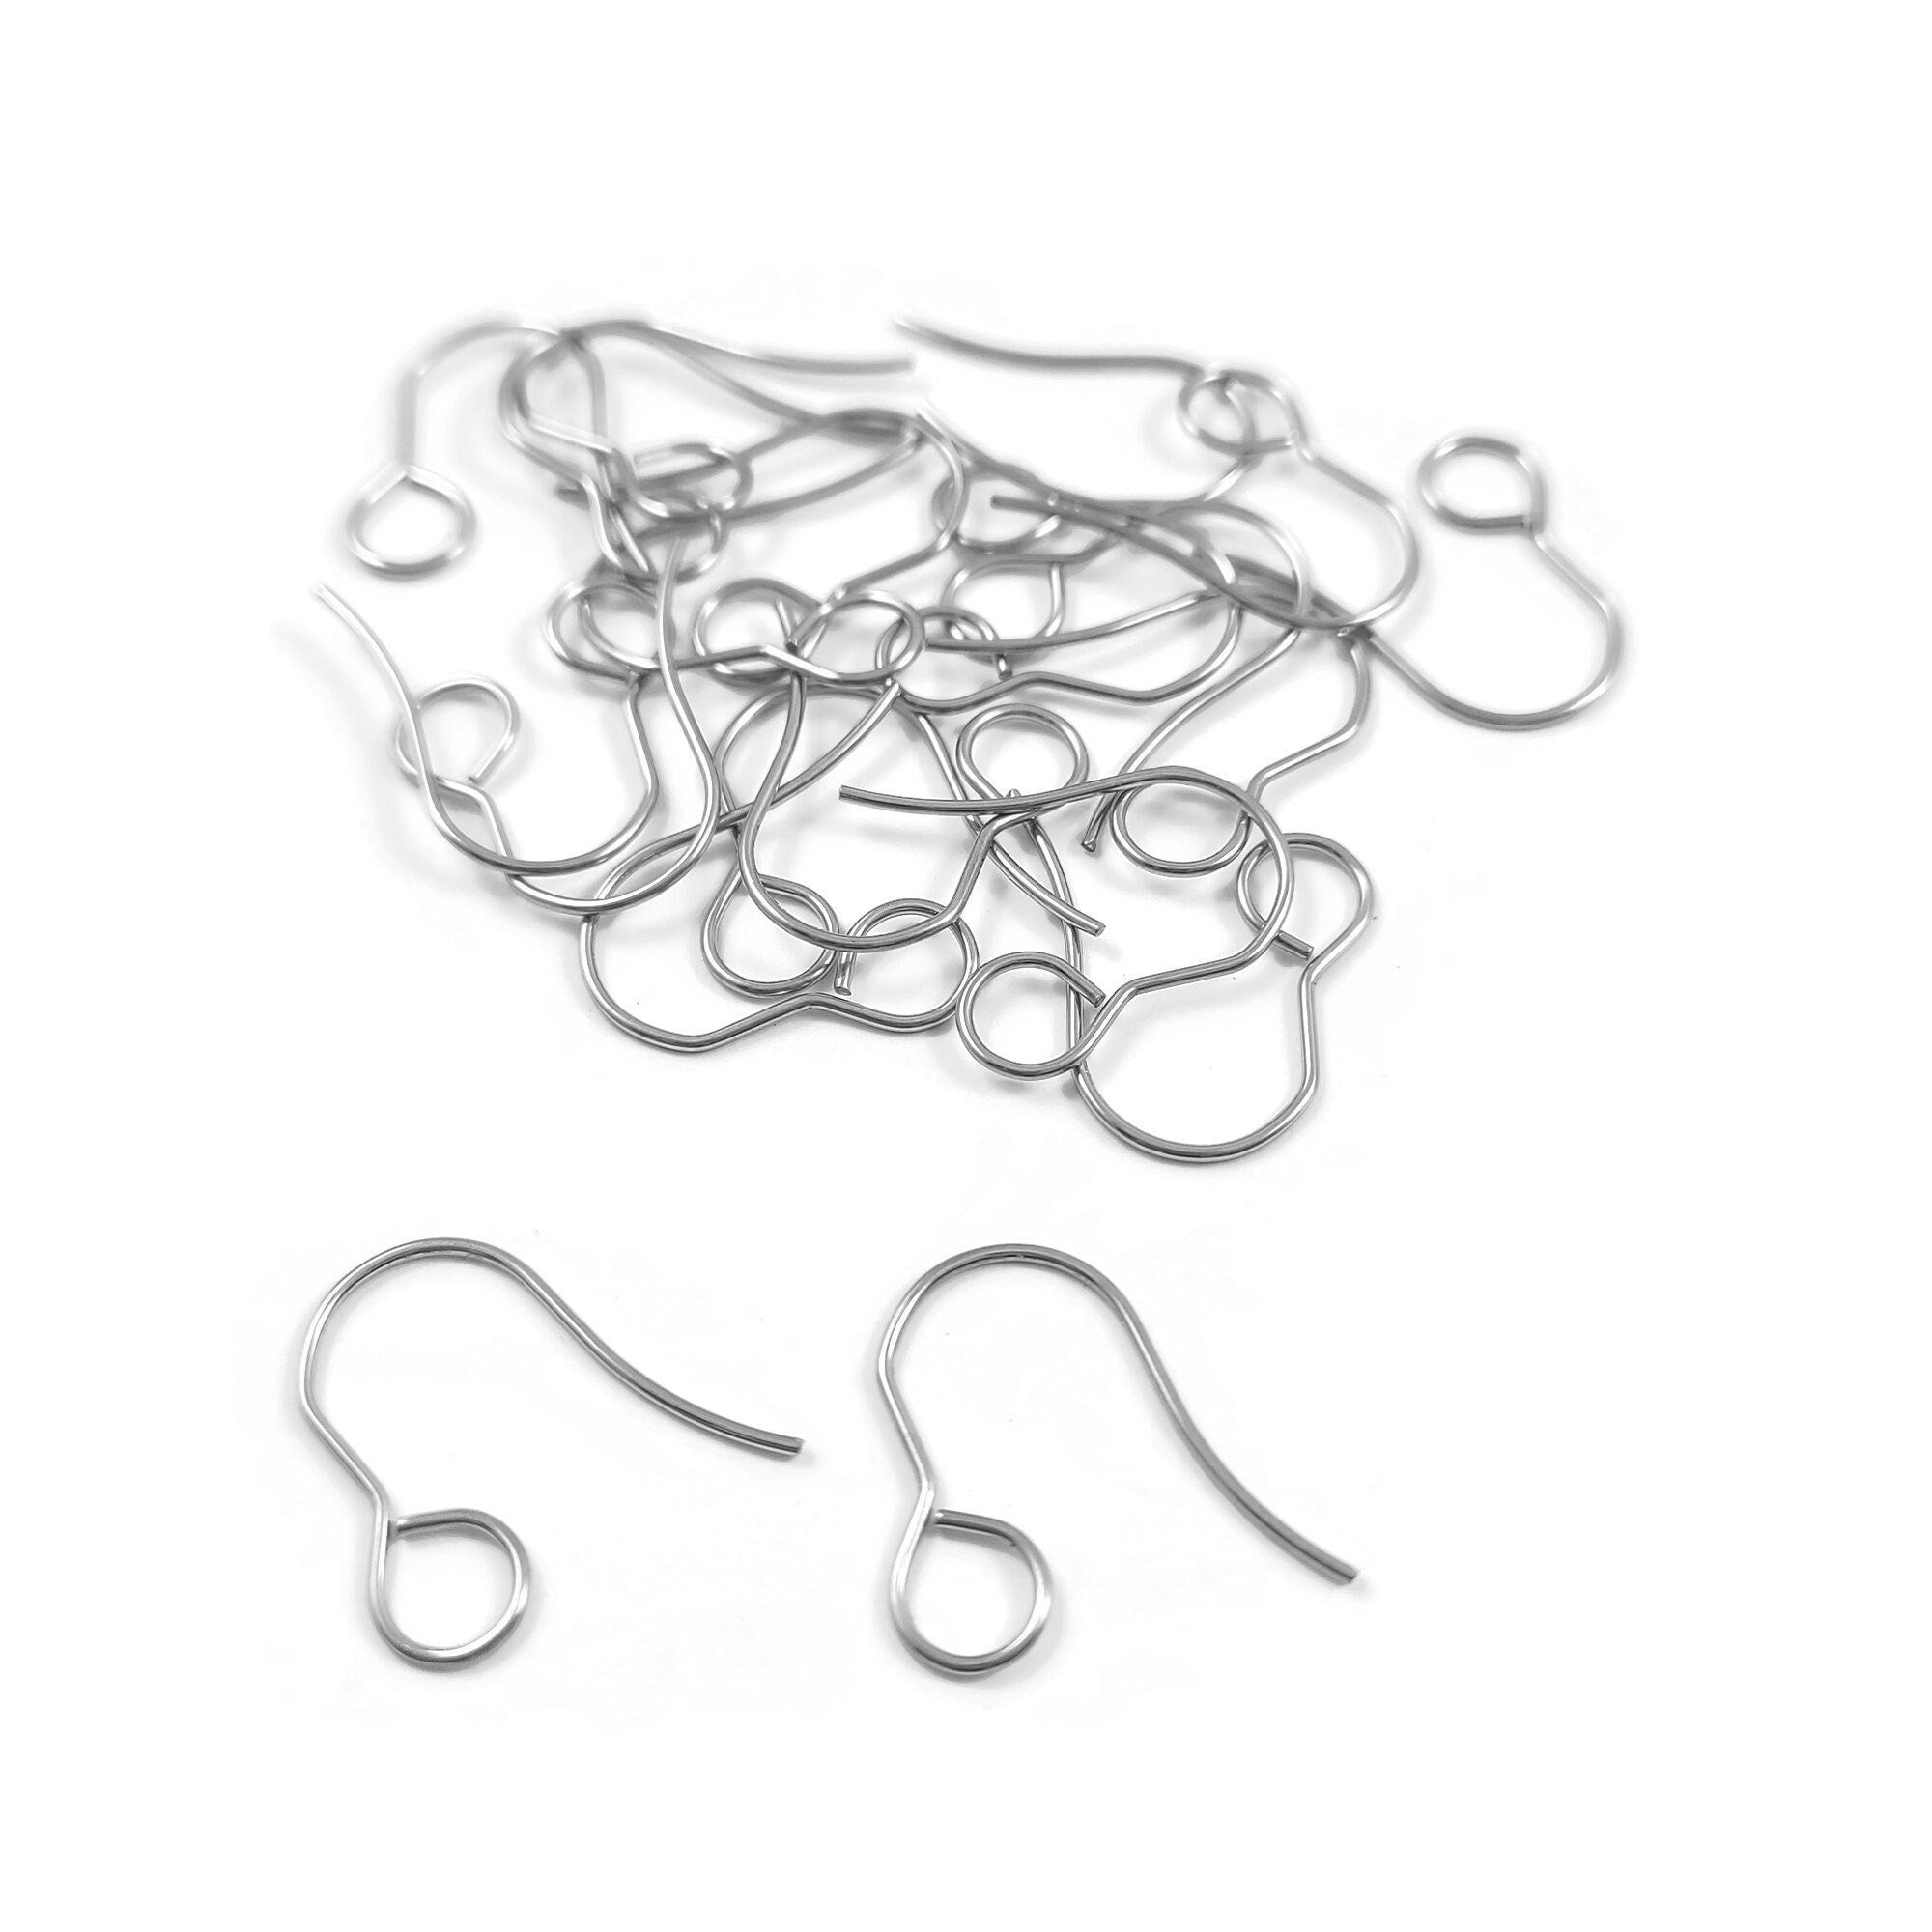 Big hole loop ear wire, Surgical steel hooks, Earring making findings